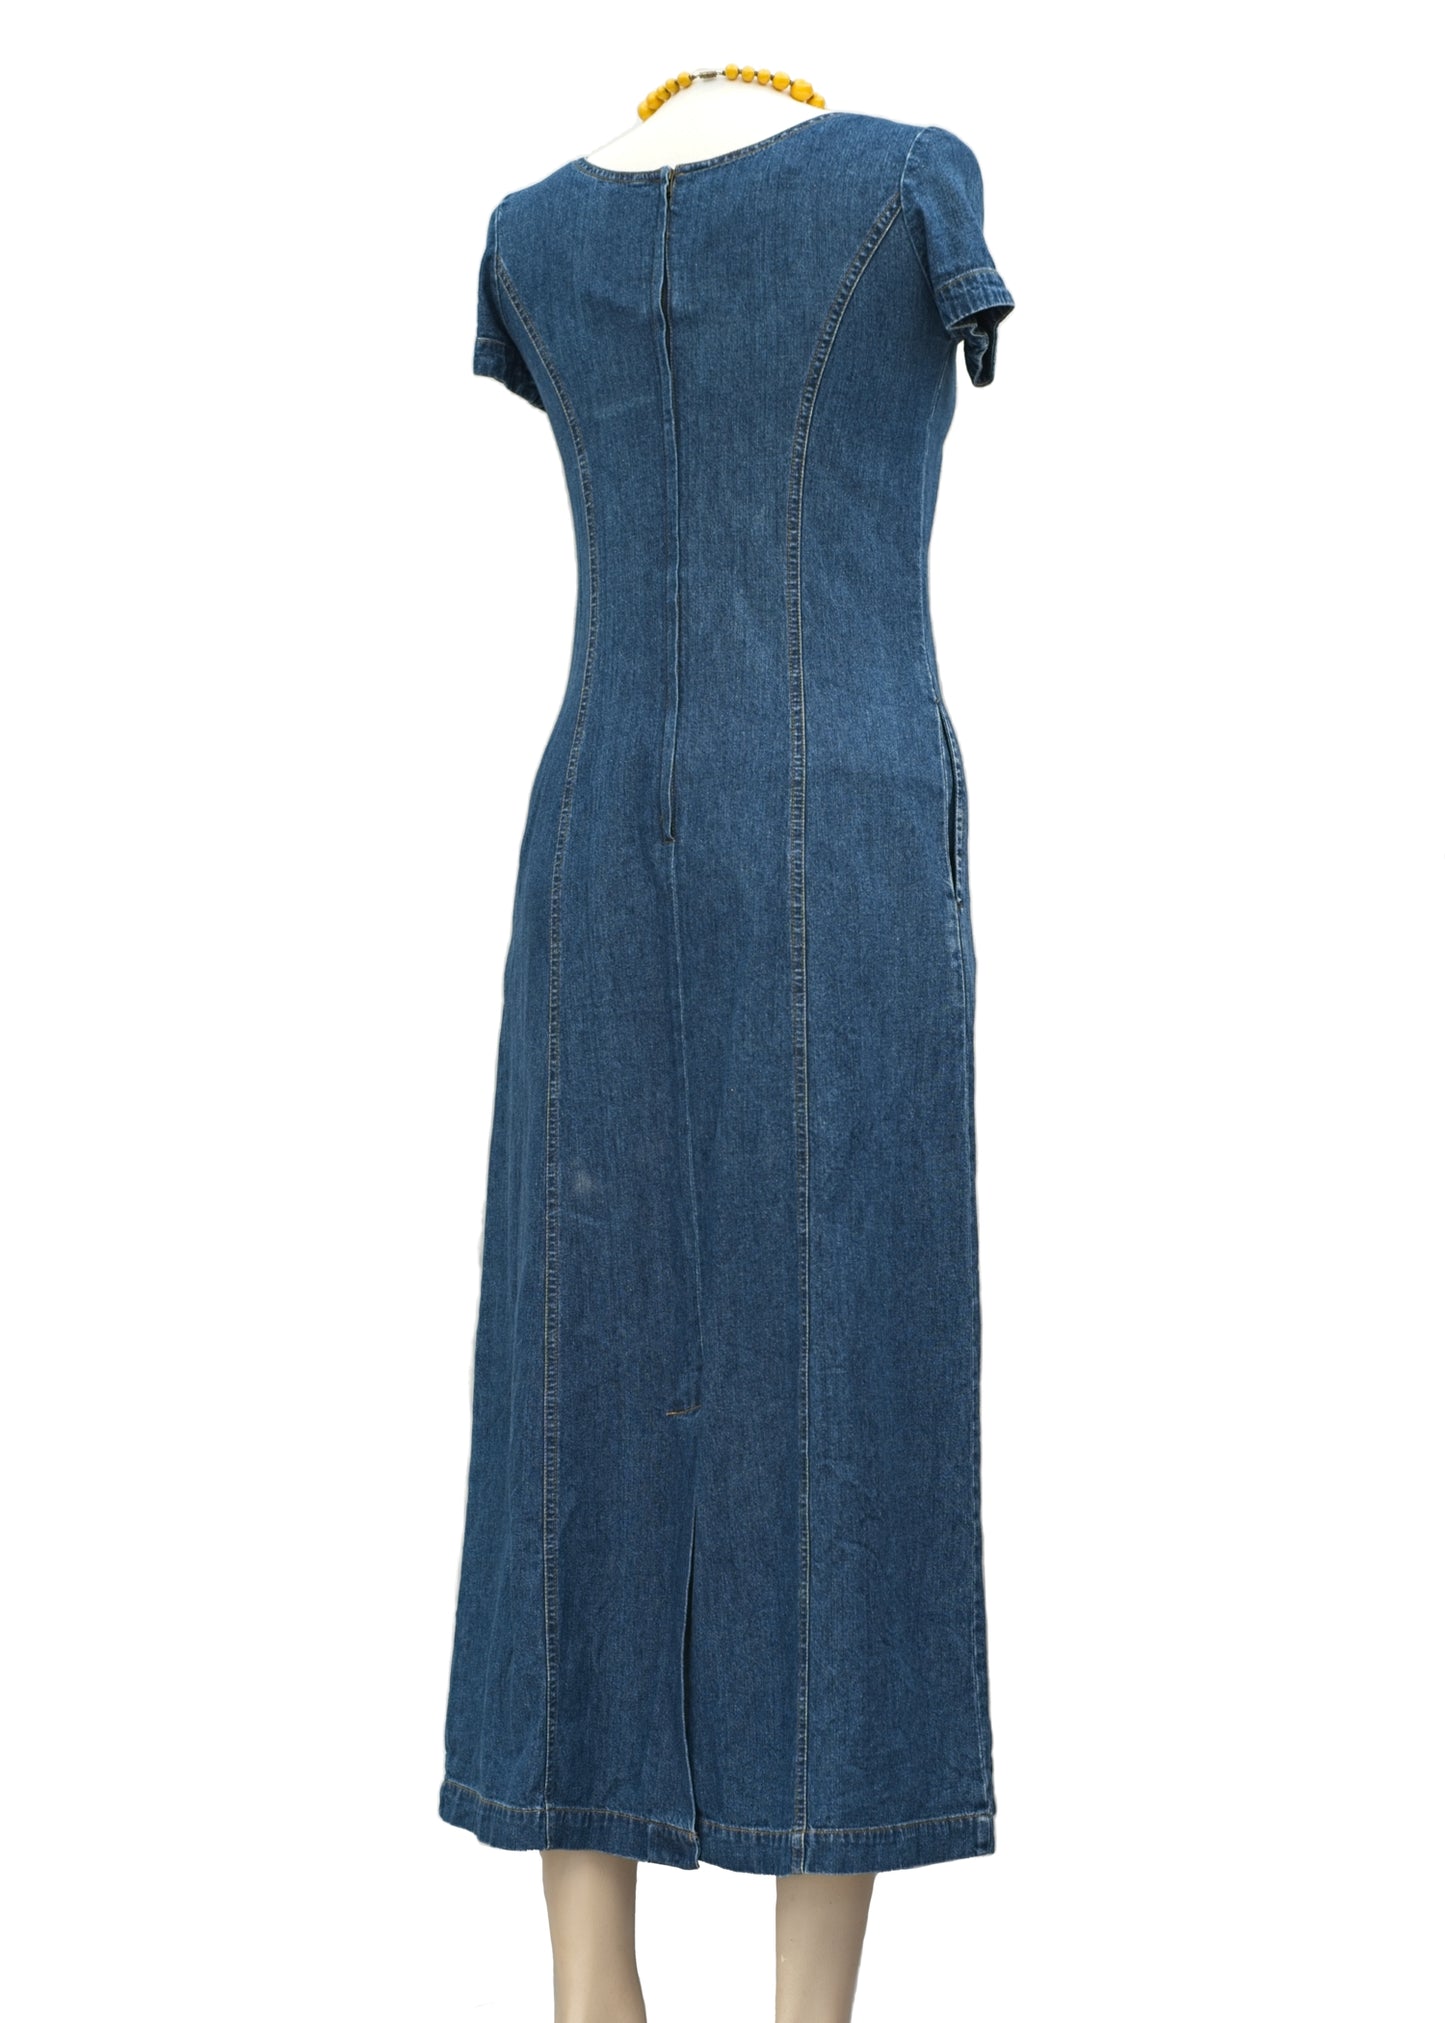 Vintage Laura Ashley Denim Dress • Short Sleeves